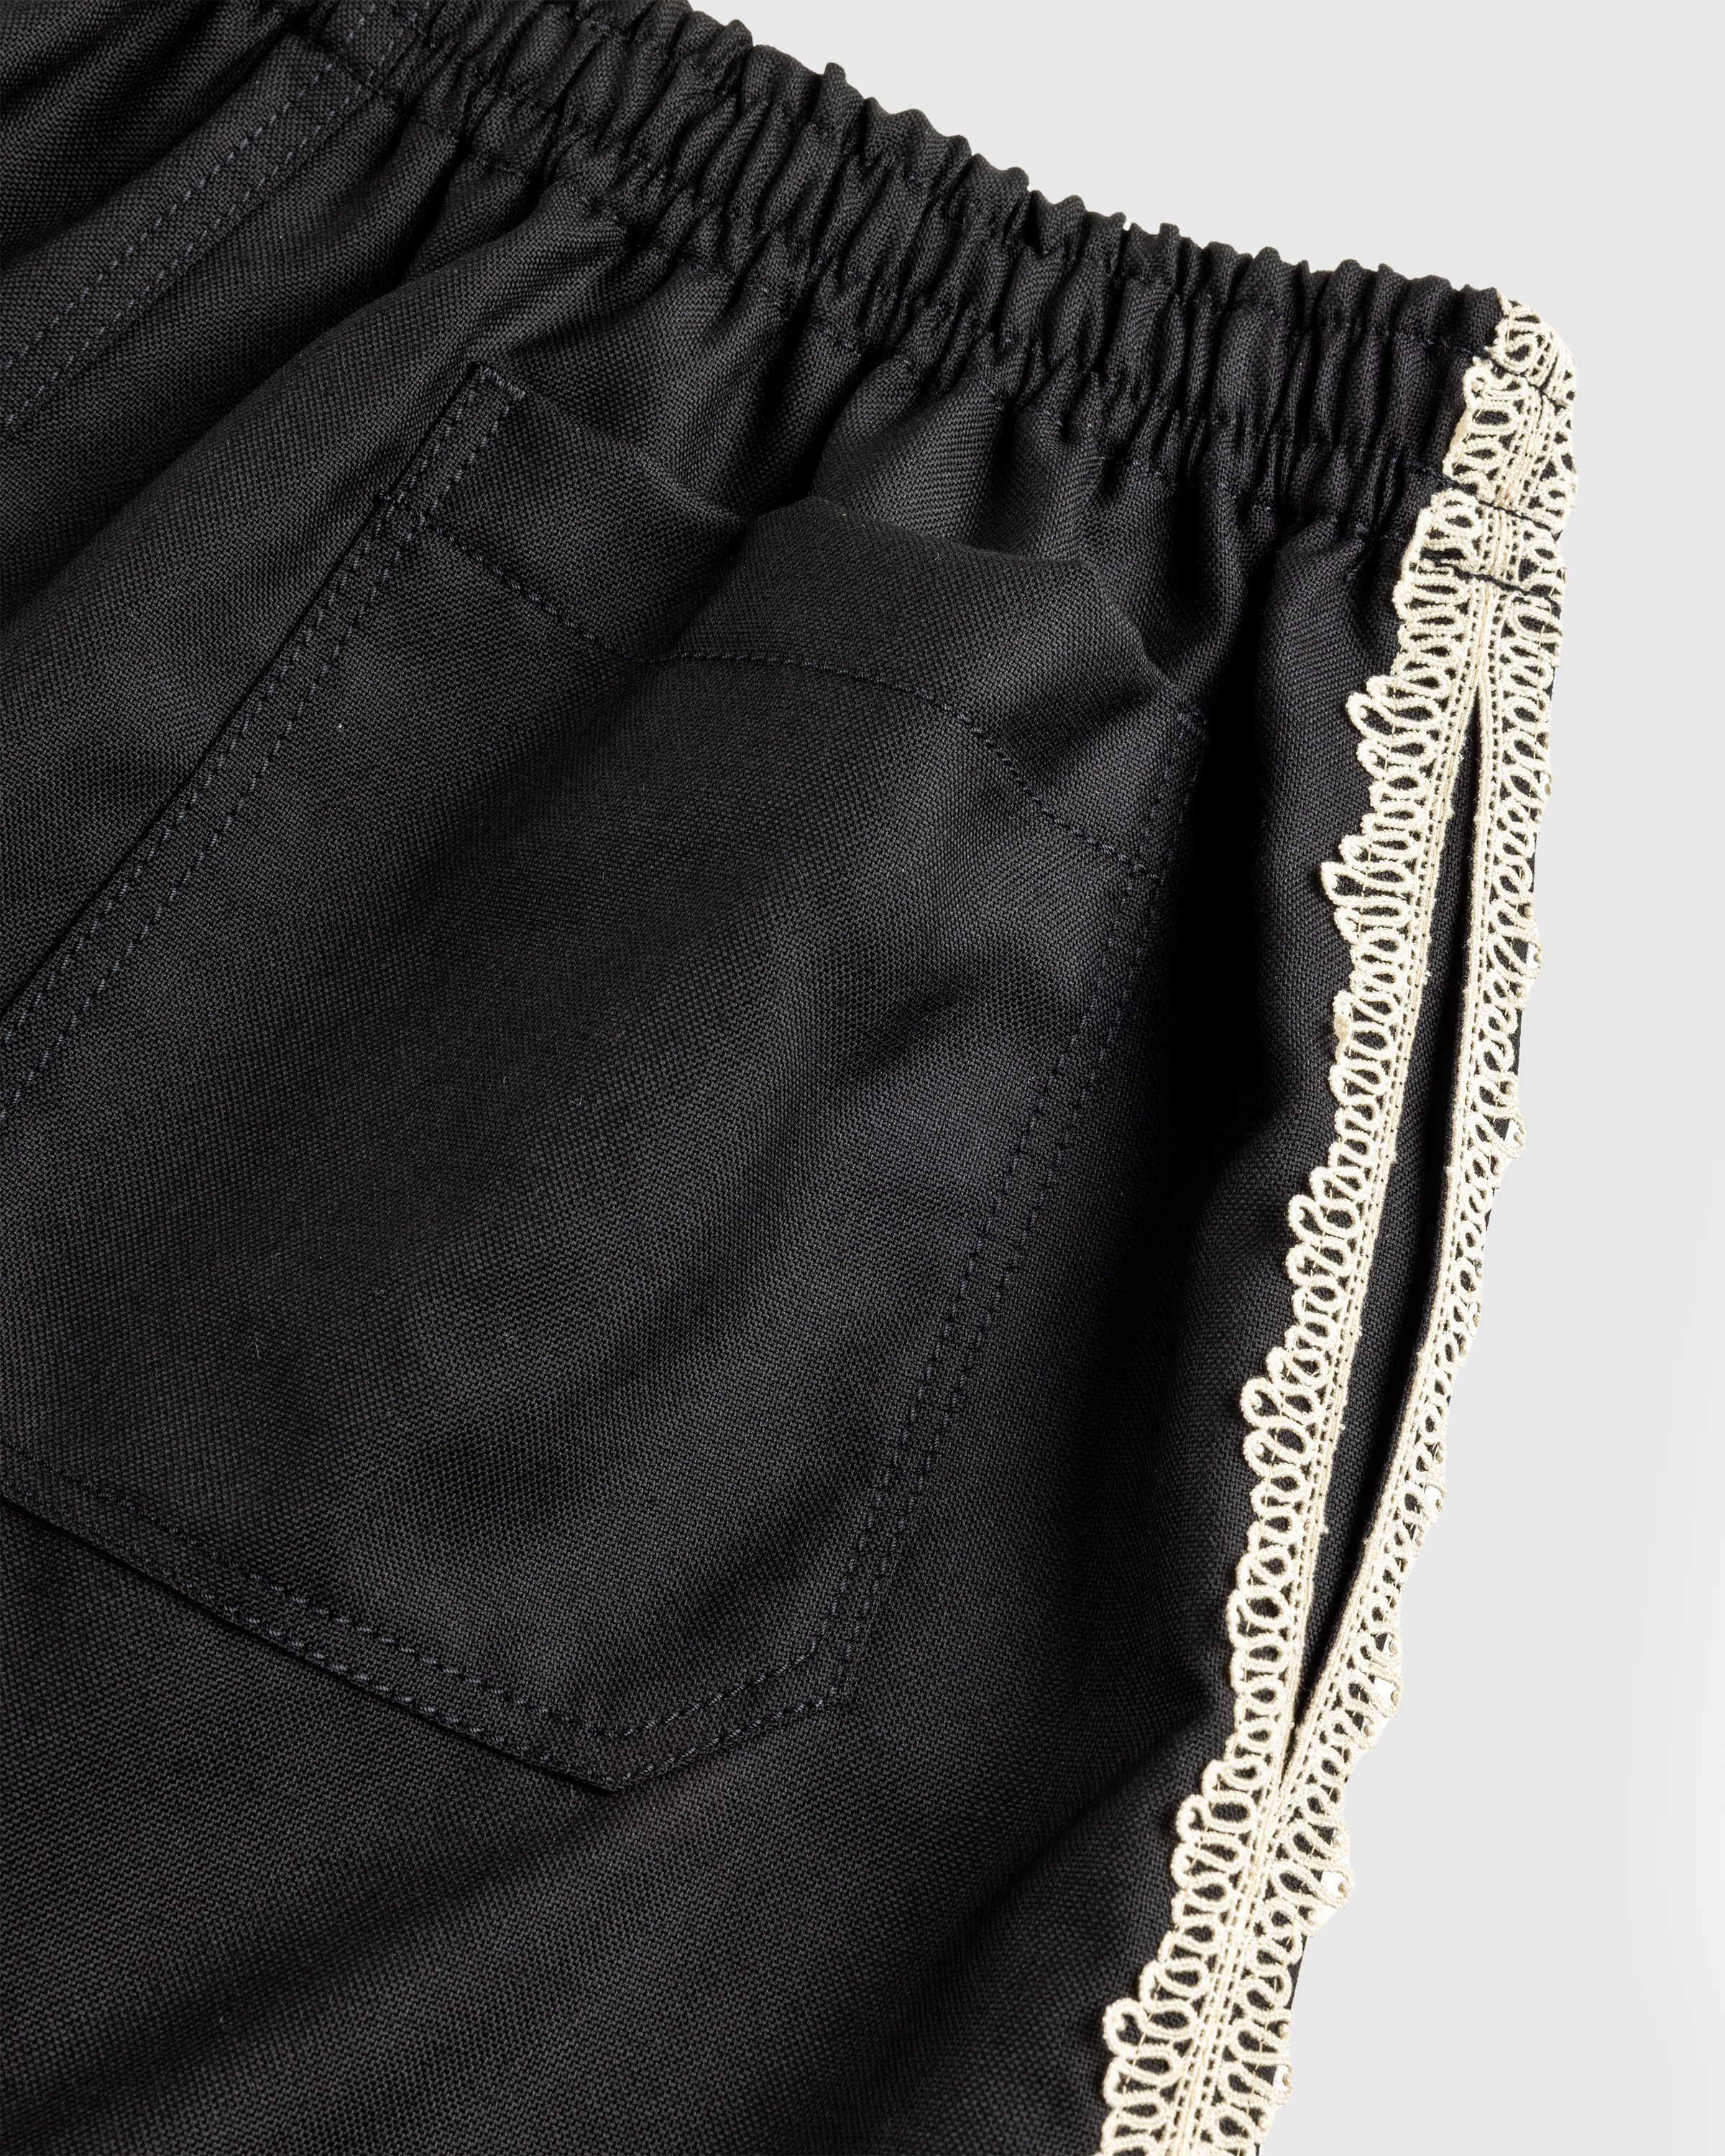 Bode – Lacework Shorts Black - Short Cuts - Black - Image 7